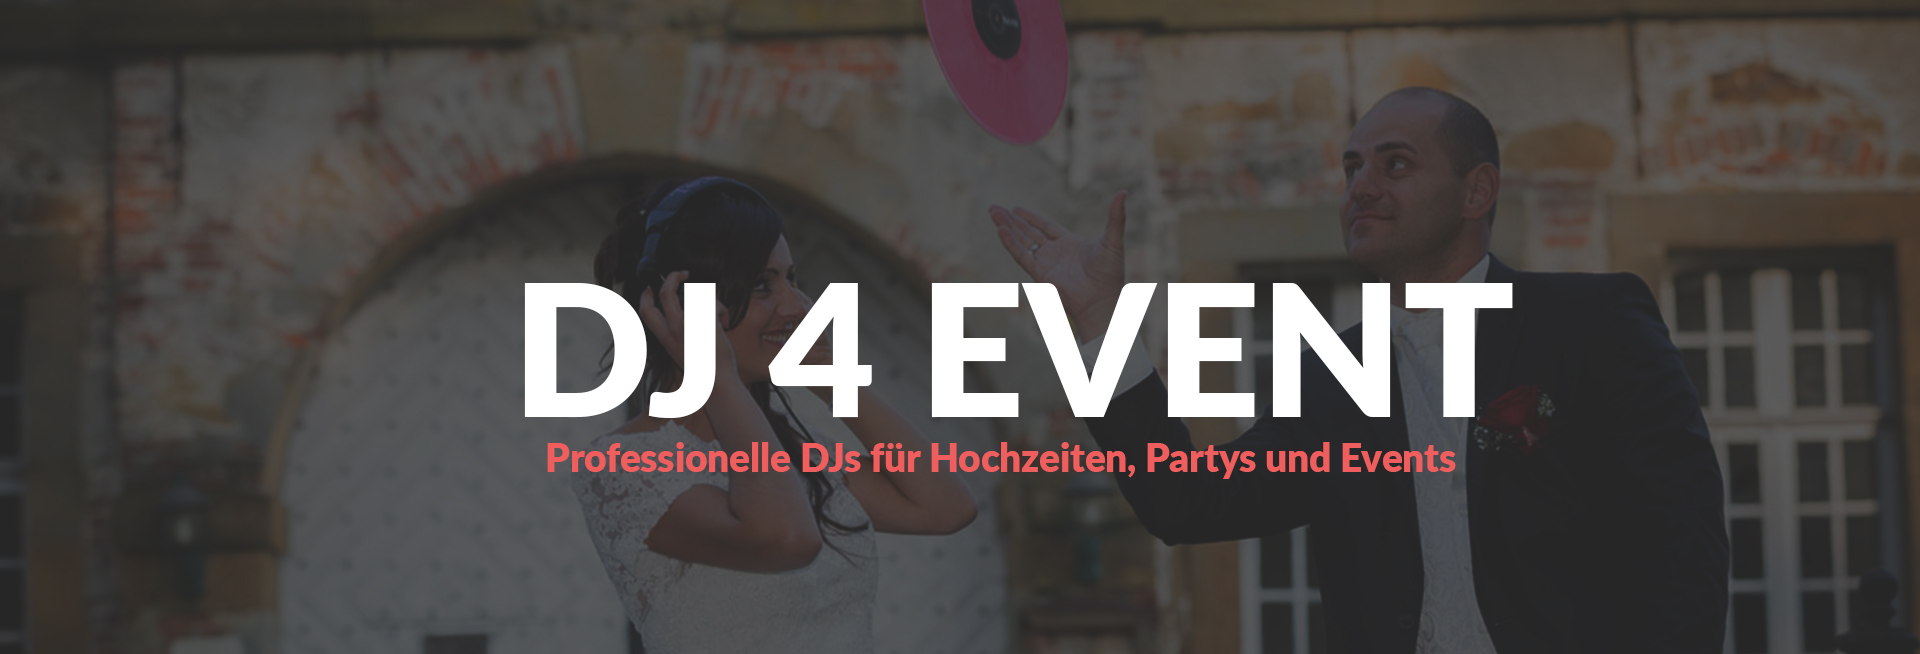 DJ 4 Event Banner